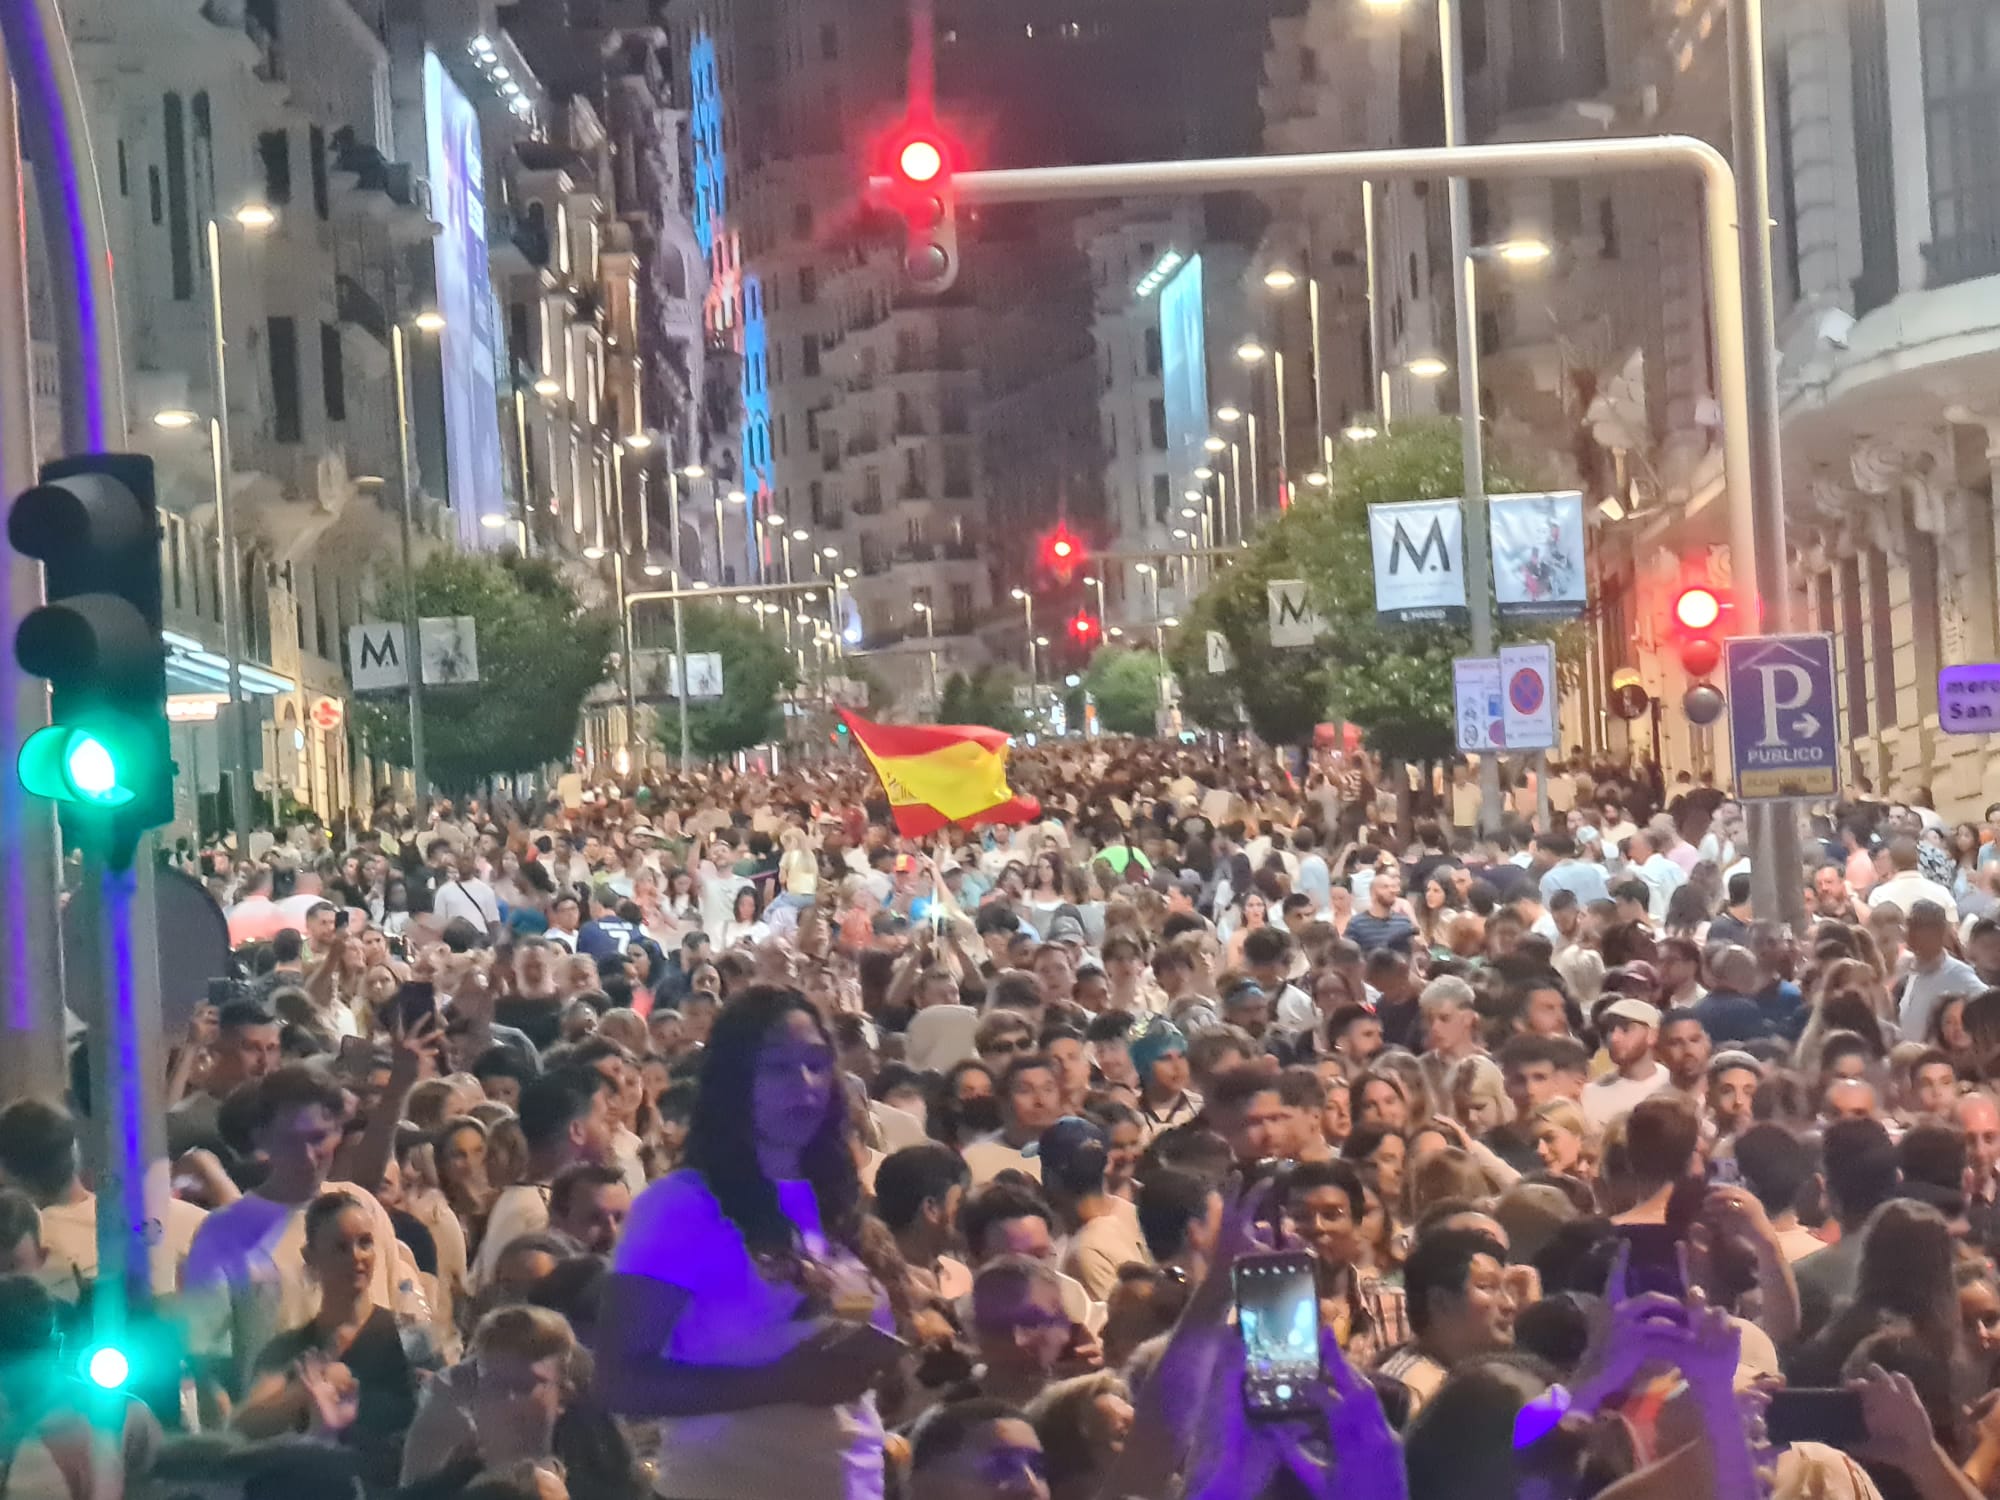 real madrid celebrations Photo: Deirdre Carney